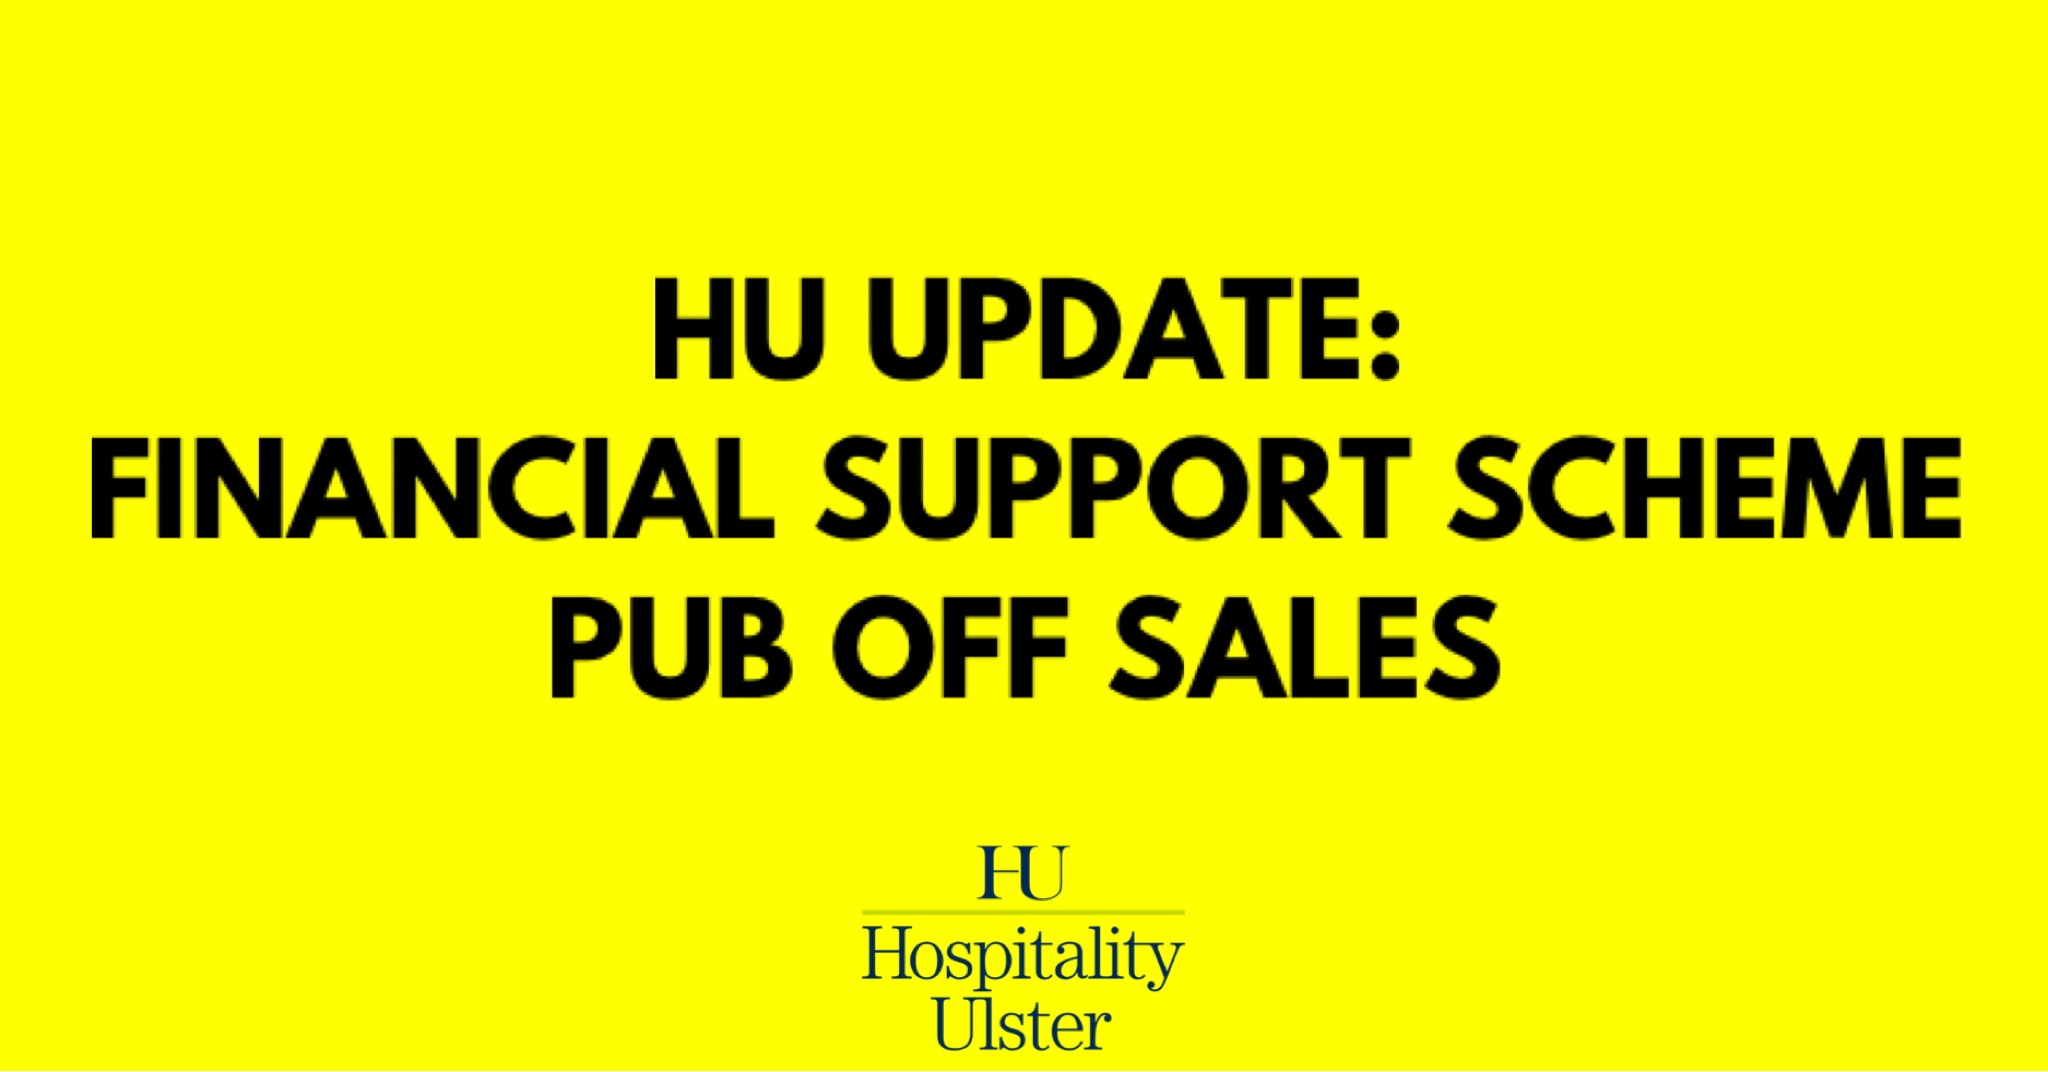 HU UPDATE - FINANCIAL SUPPORT SCHEME AND PUB OFF SALES